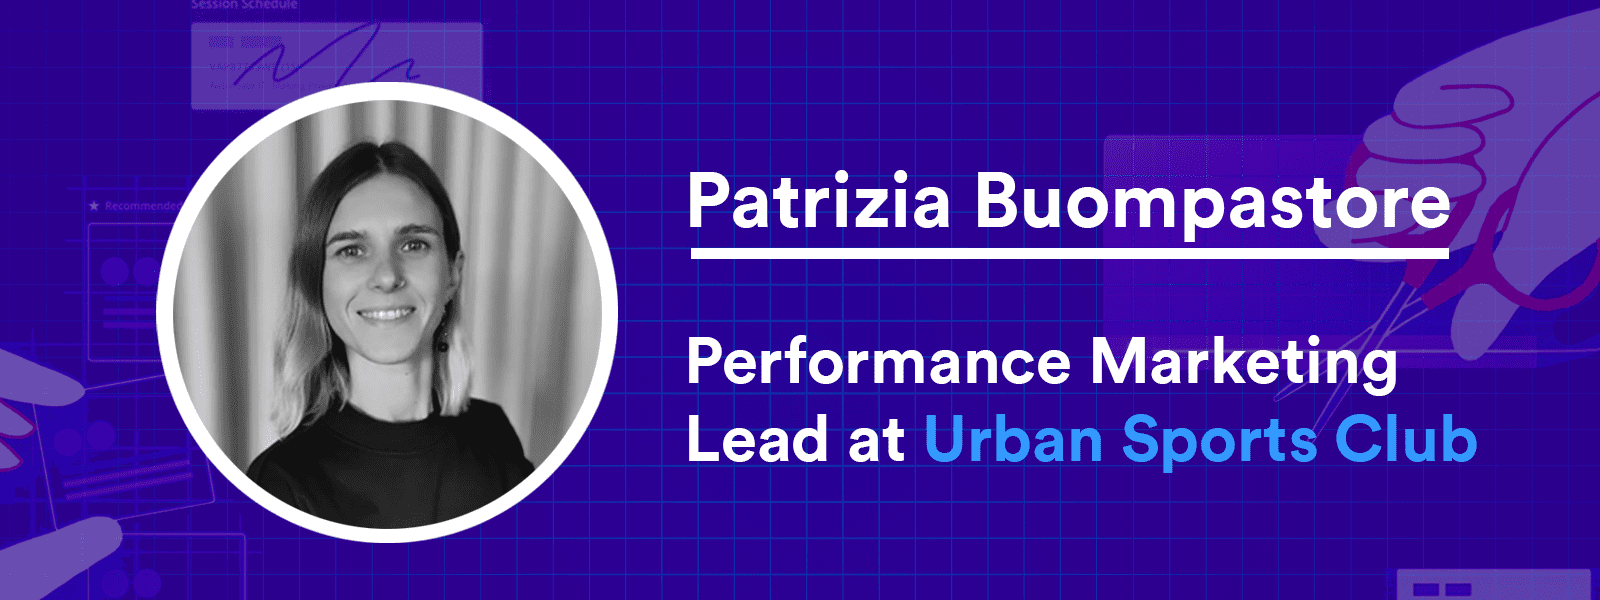 Patrizia Buompastore, Performance Marketing Lead at Urban Sports Club